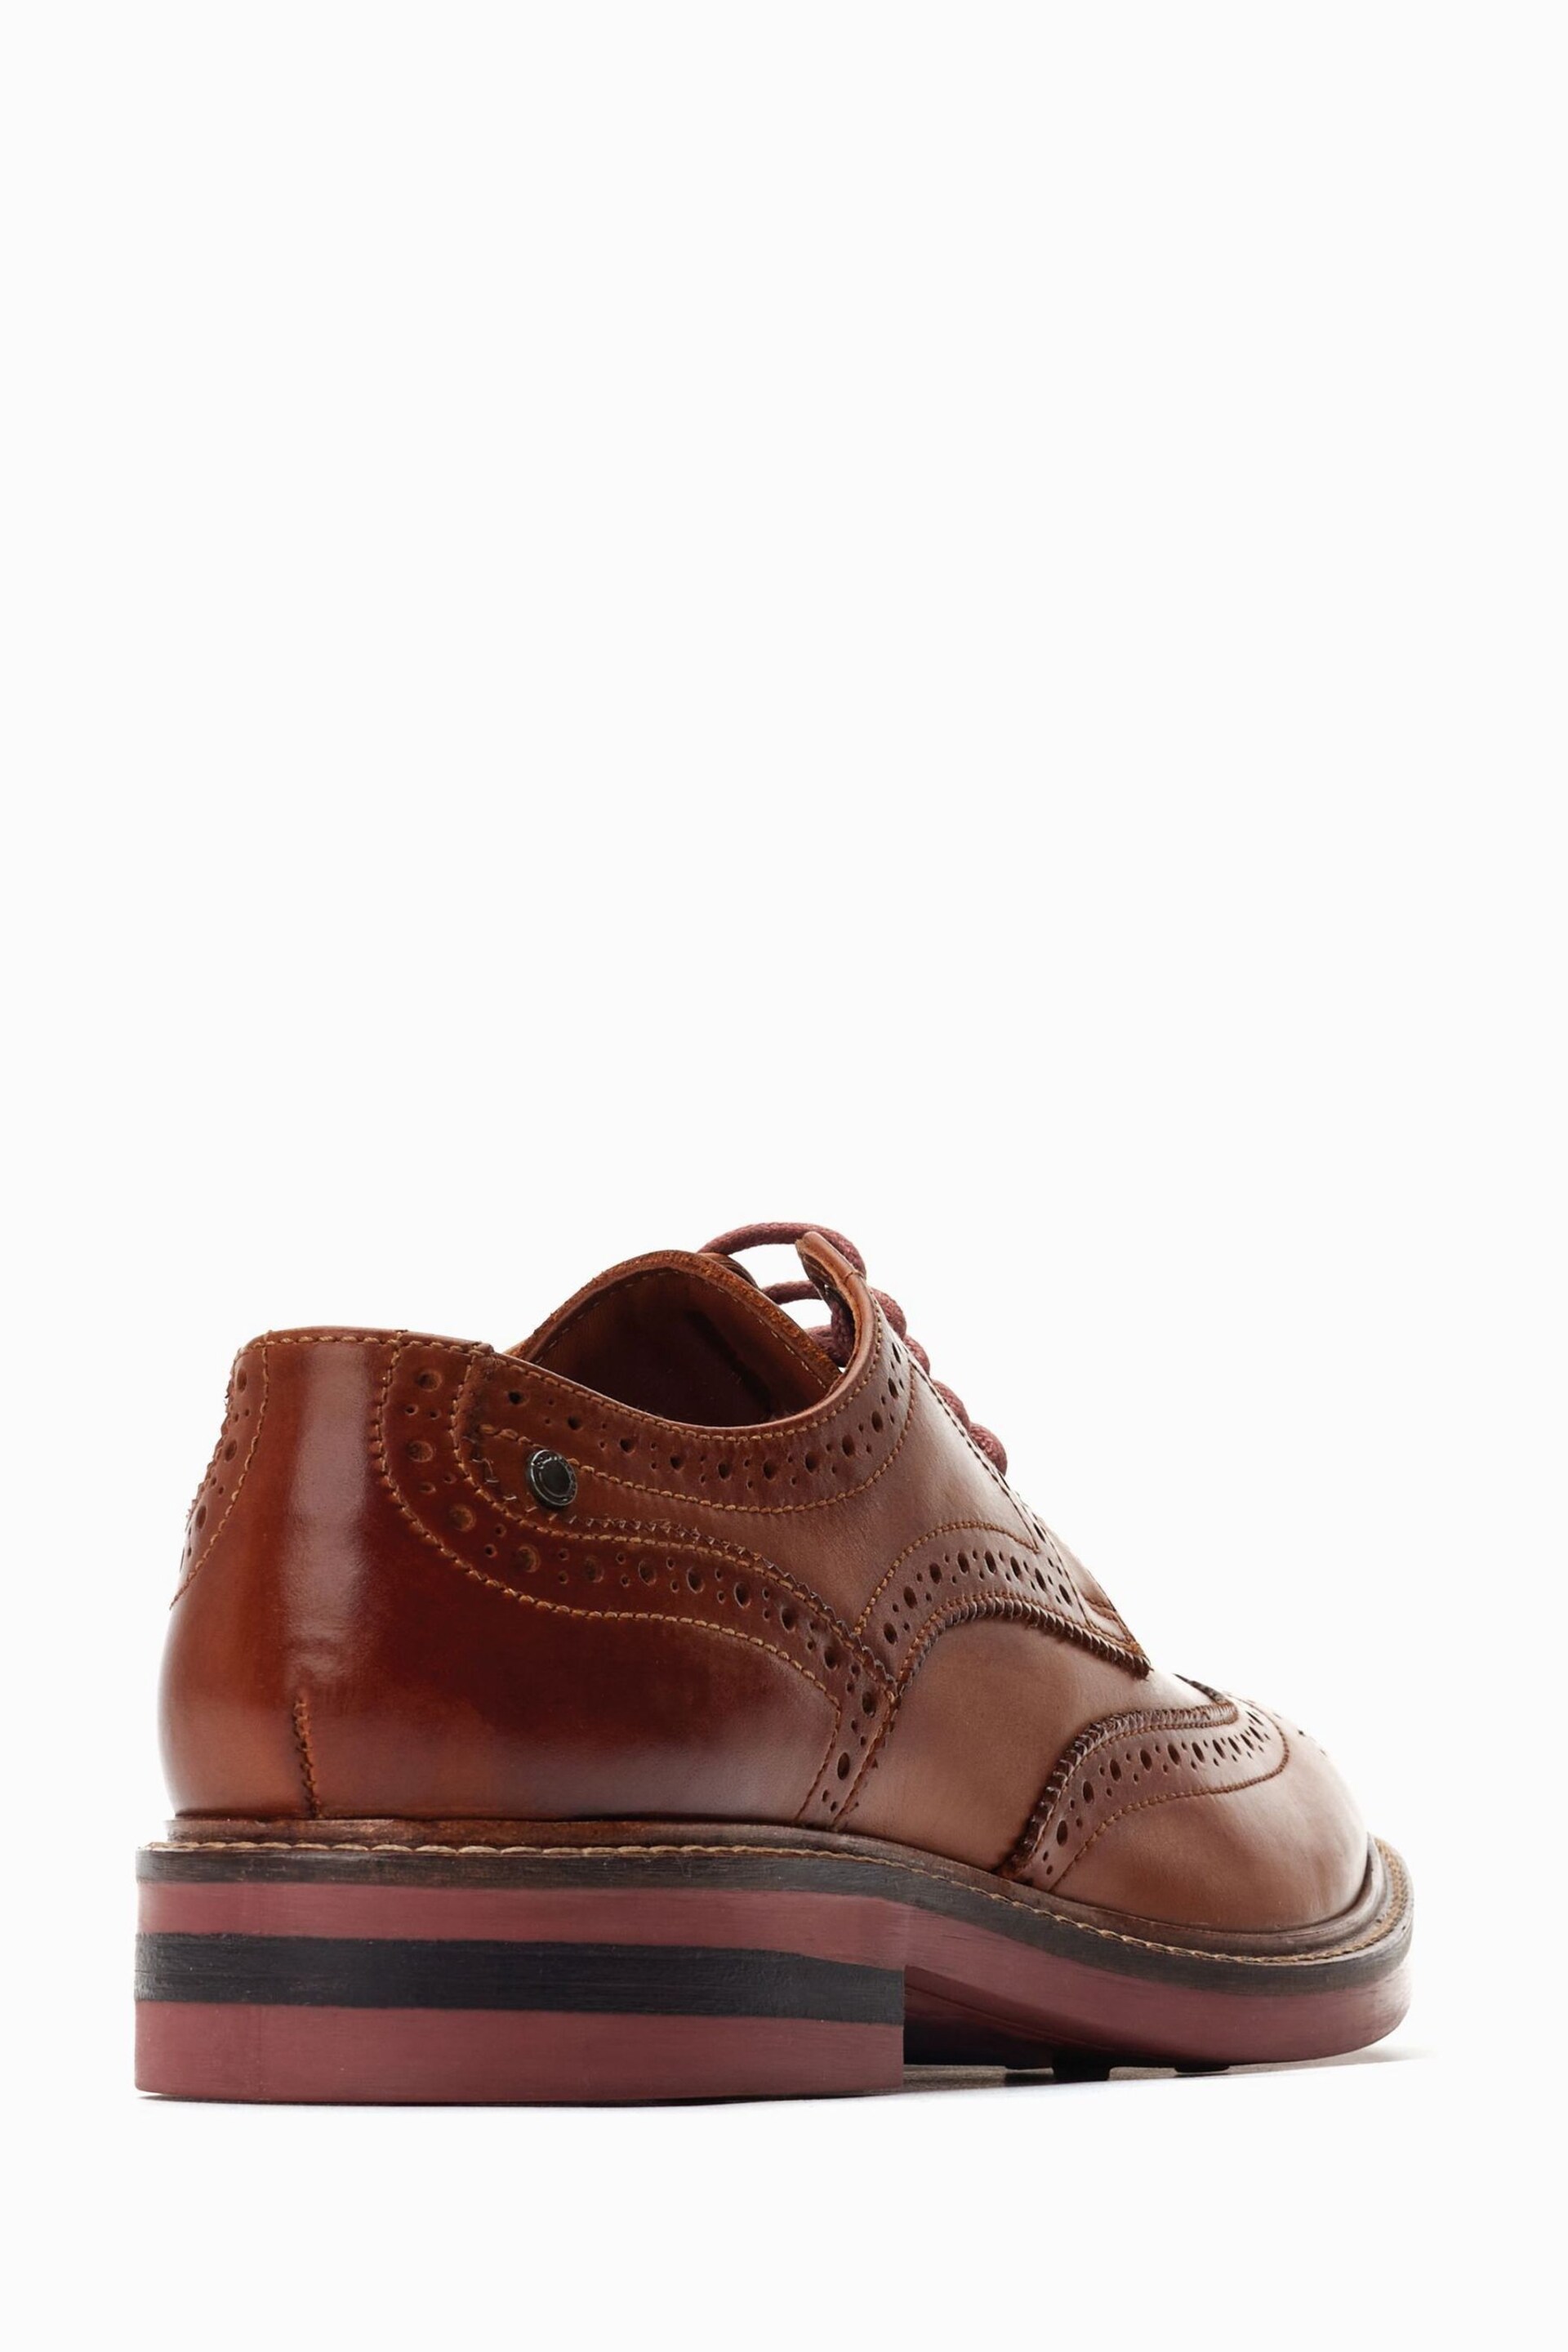 Base London Hatfield Lace Up Brogue Shoes - Image 2 of 6